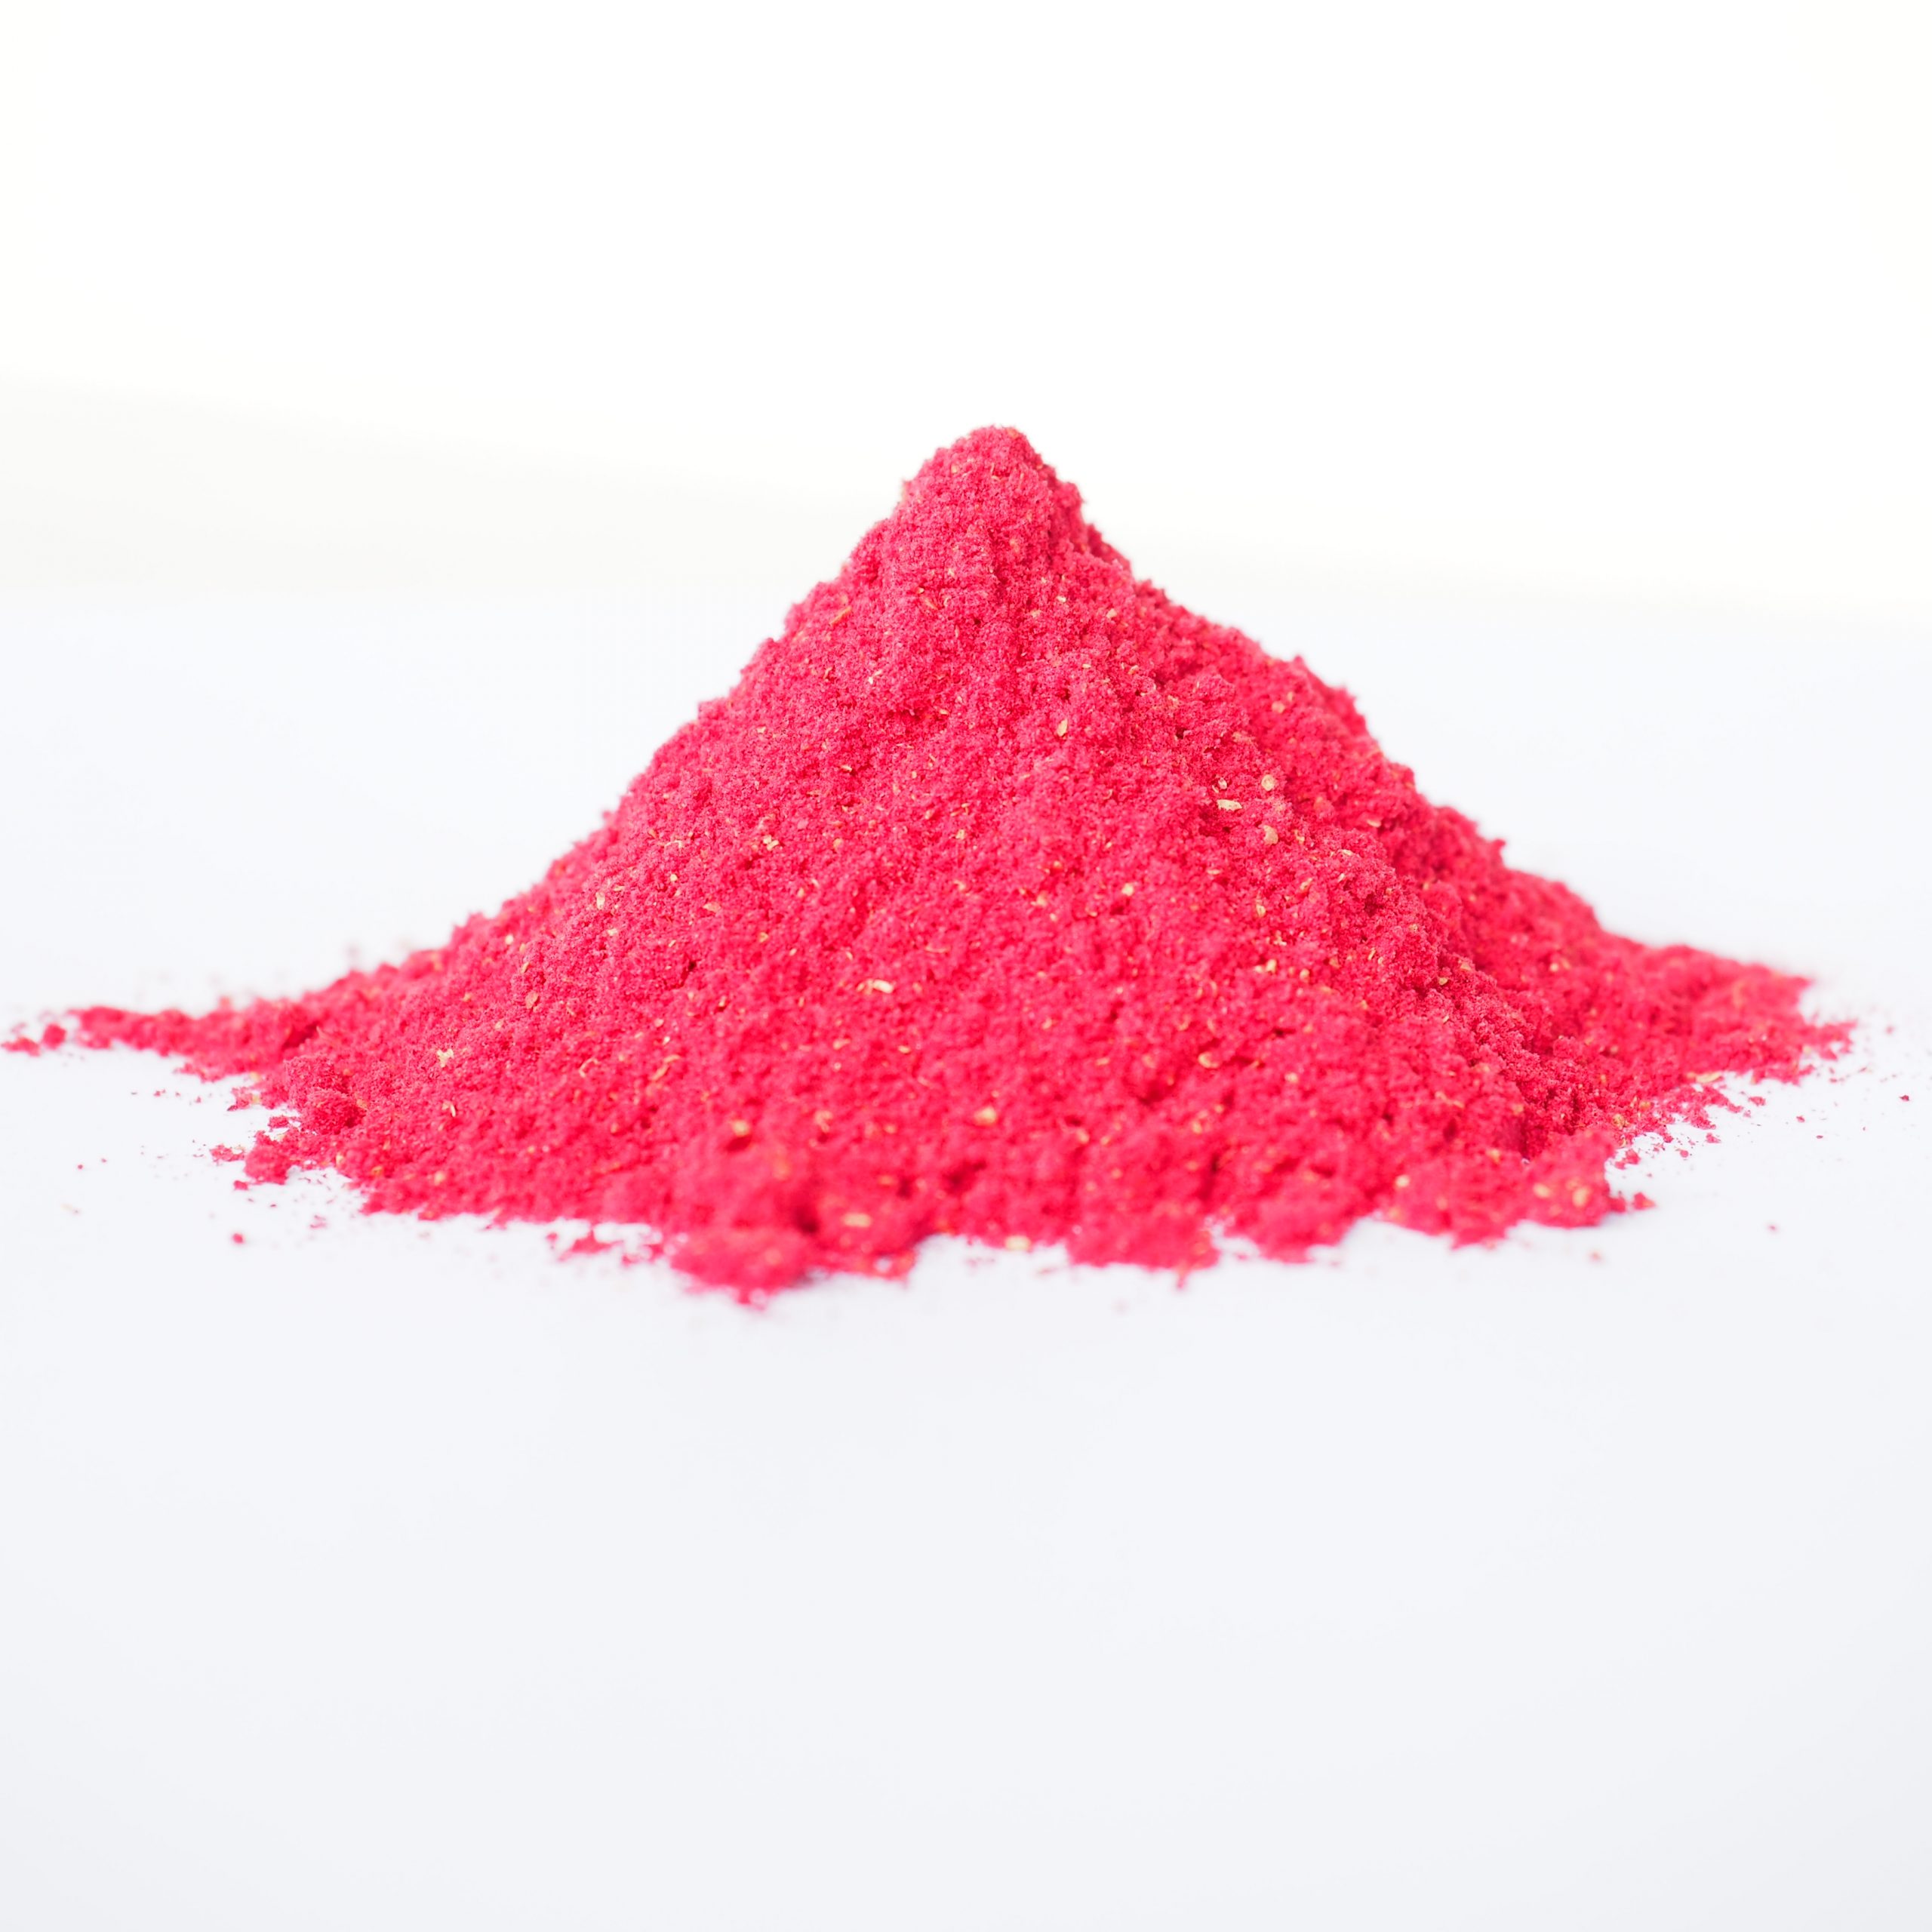 Raspberry Powder Pile